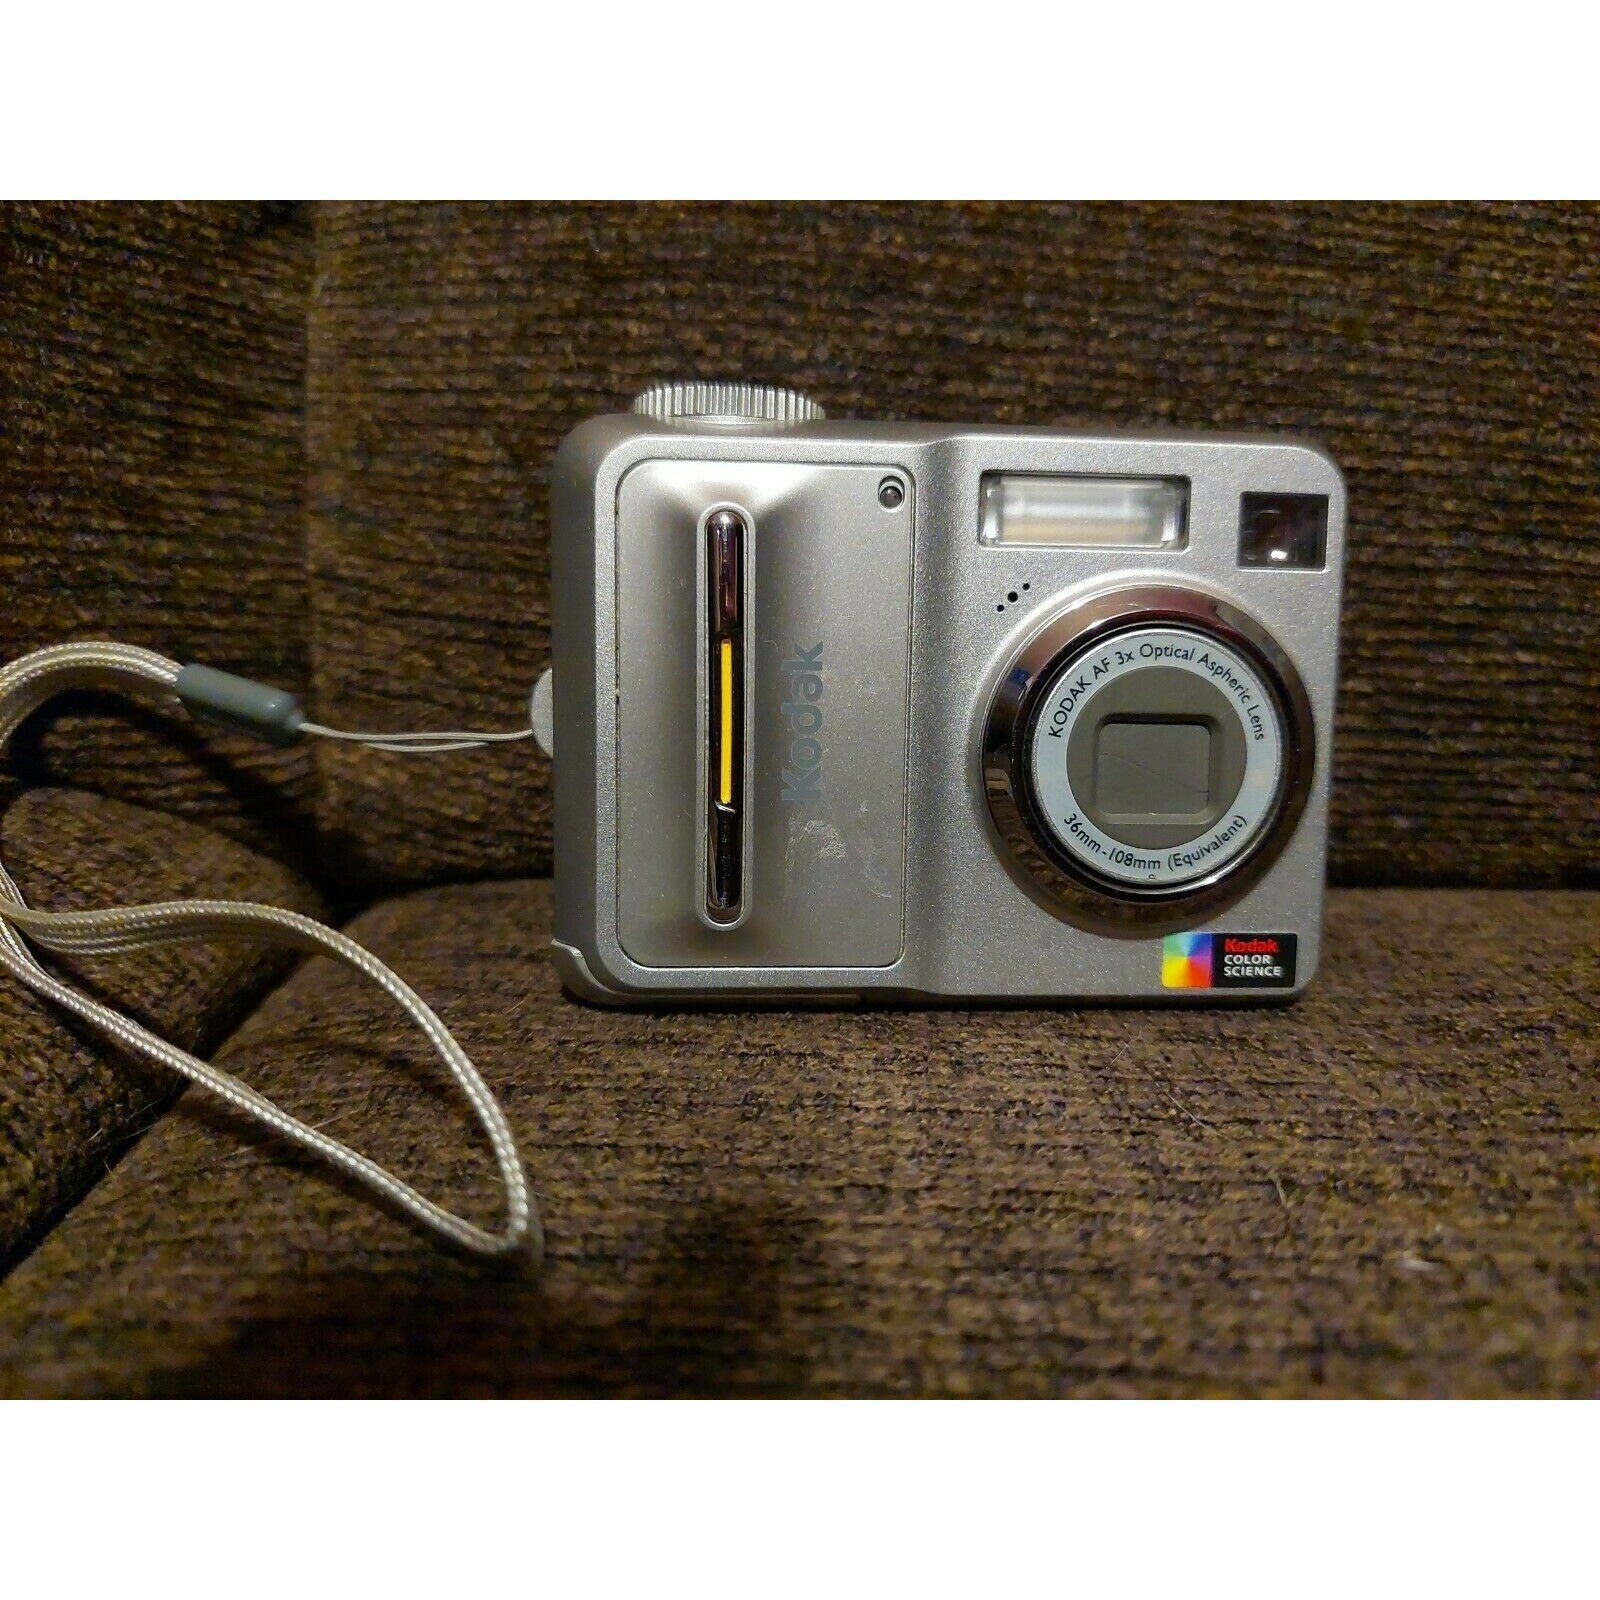 Kodak EasyShare C653 6.1MP Digital Camera - Silver.